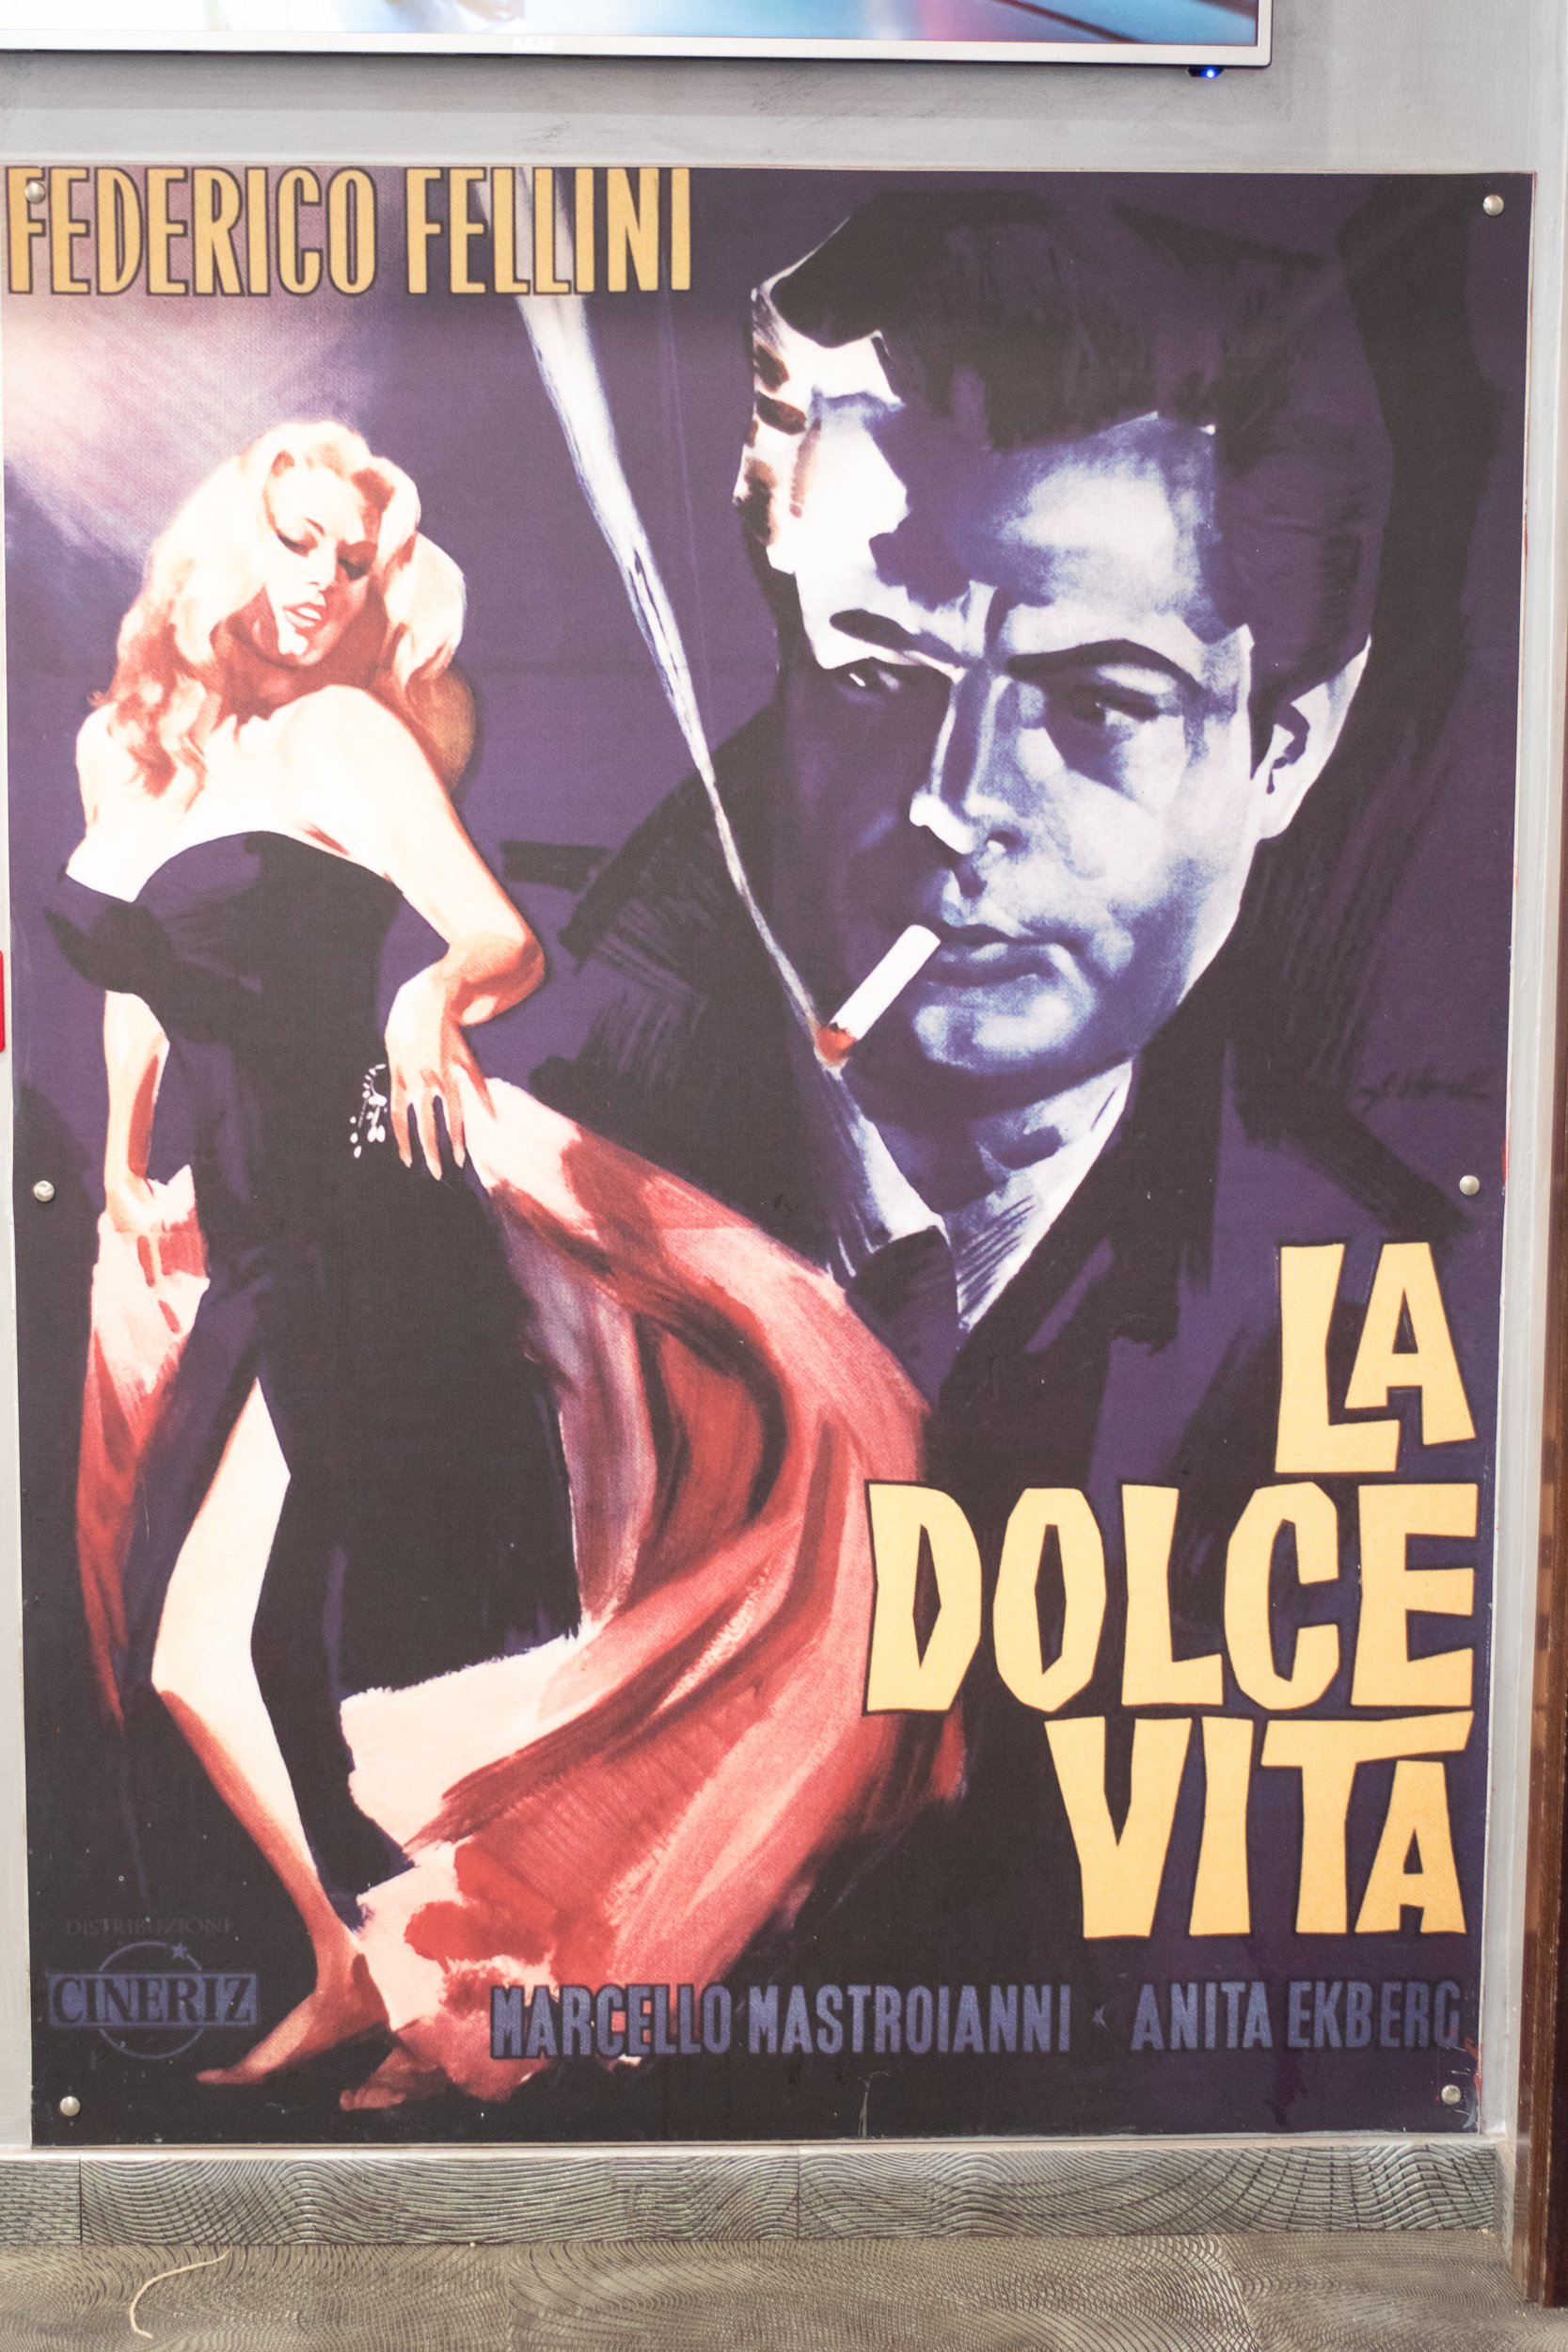 Greatest Italia Movies - Fellini's La Dolce Vita